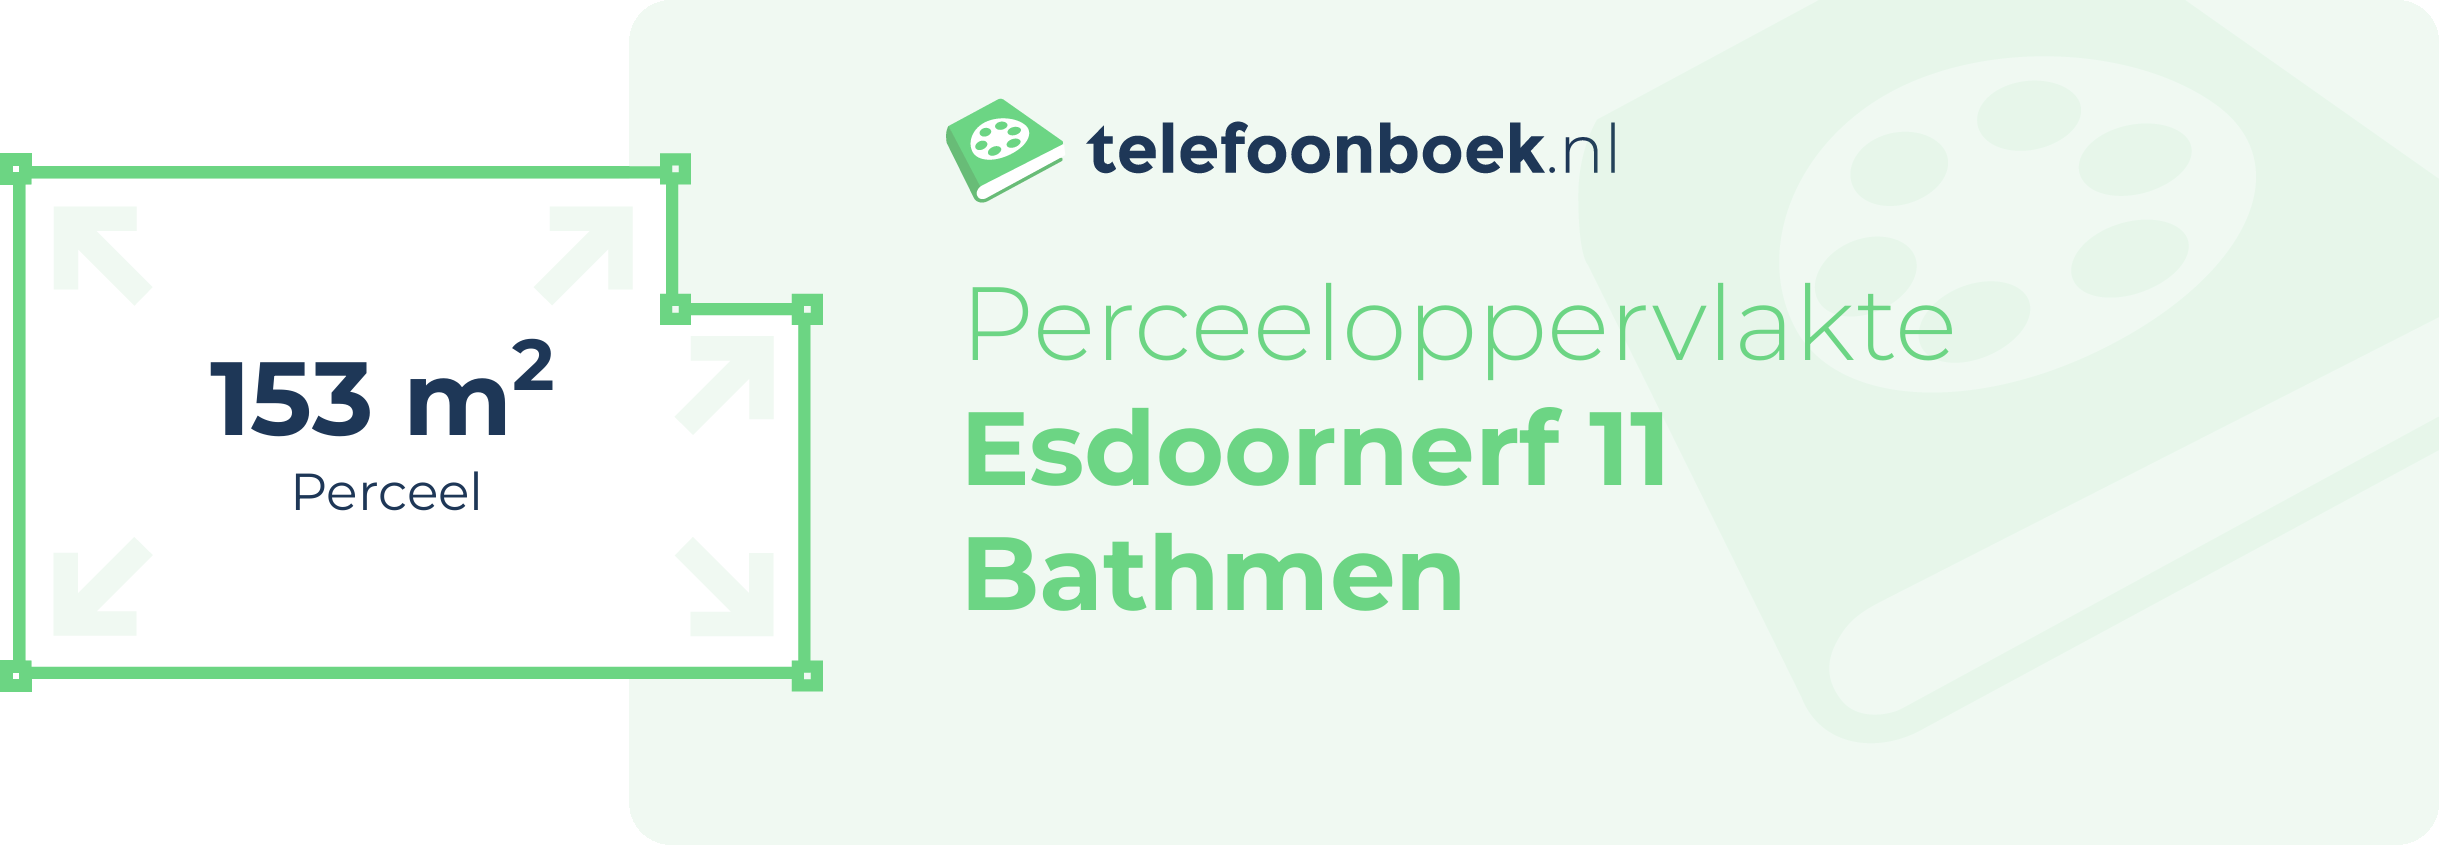 Perceeloppervlakte Esdoornerf 11 Bathmen